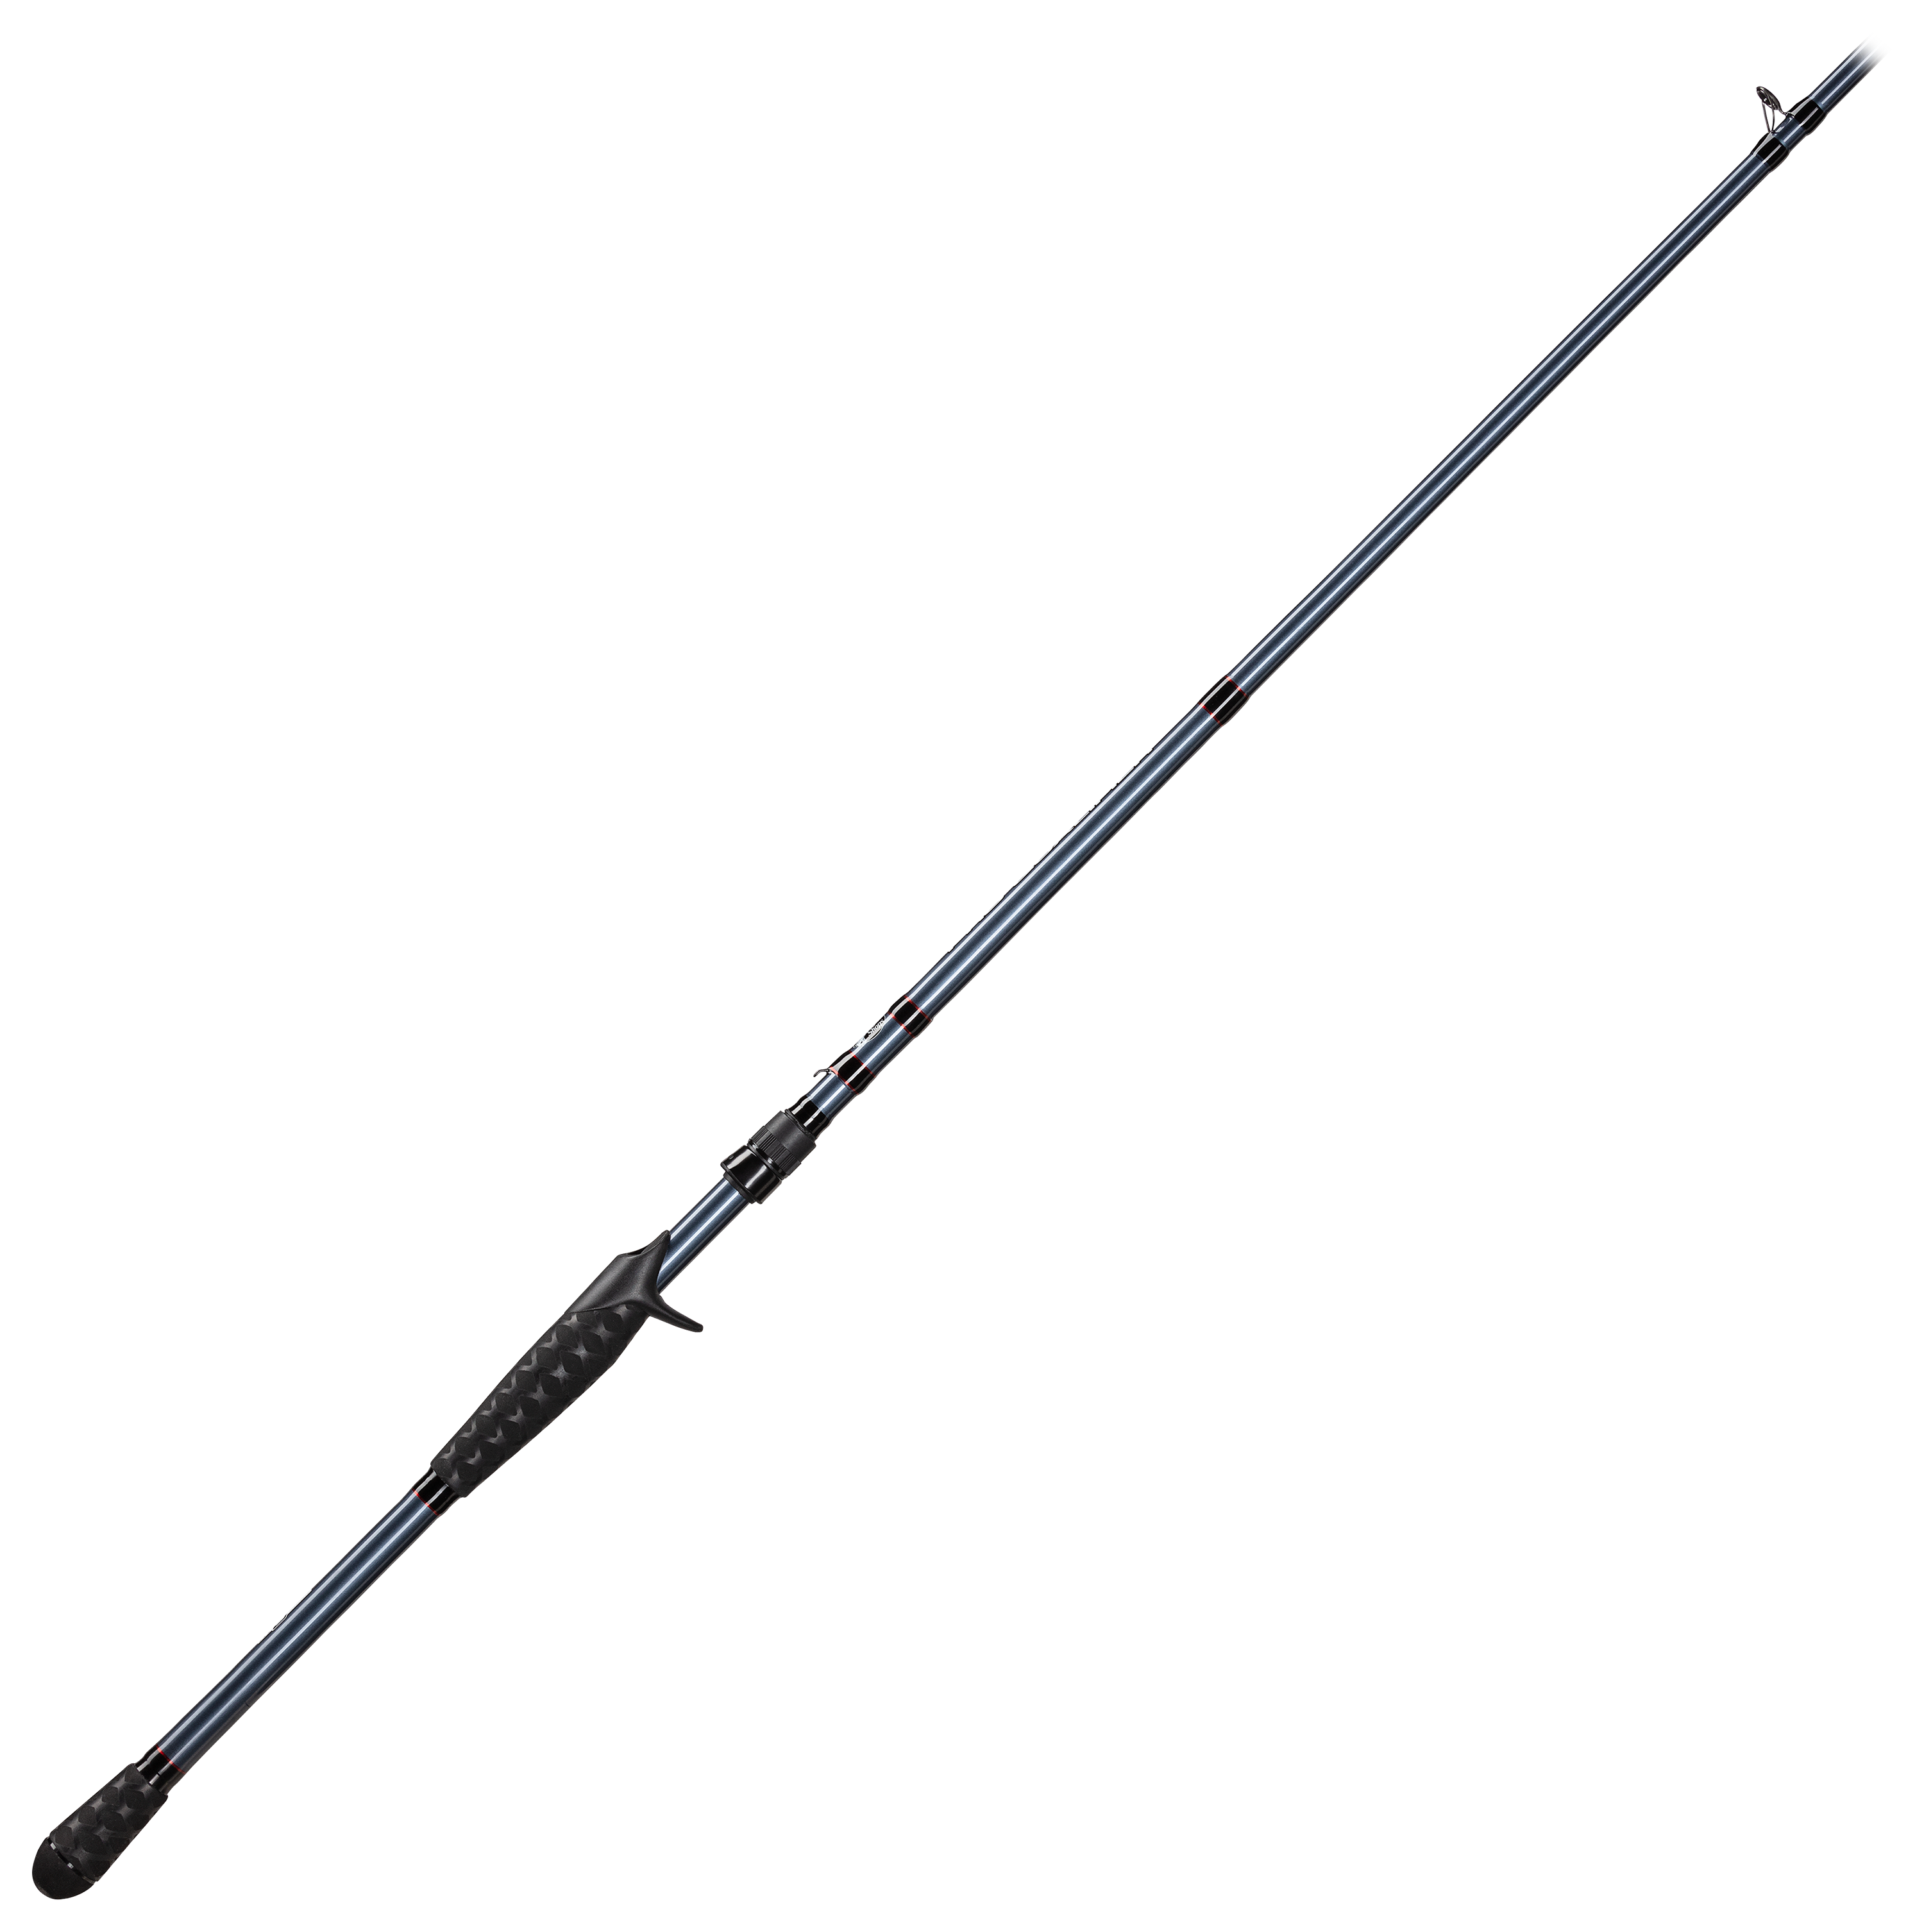 Bass Pro Shops Pro Qualifier Casting Rod - 7' - Medium Heavy - Fast - 3 Pieces - B